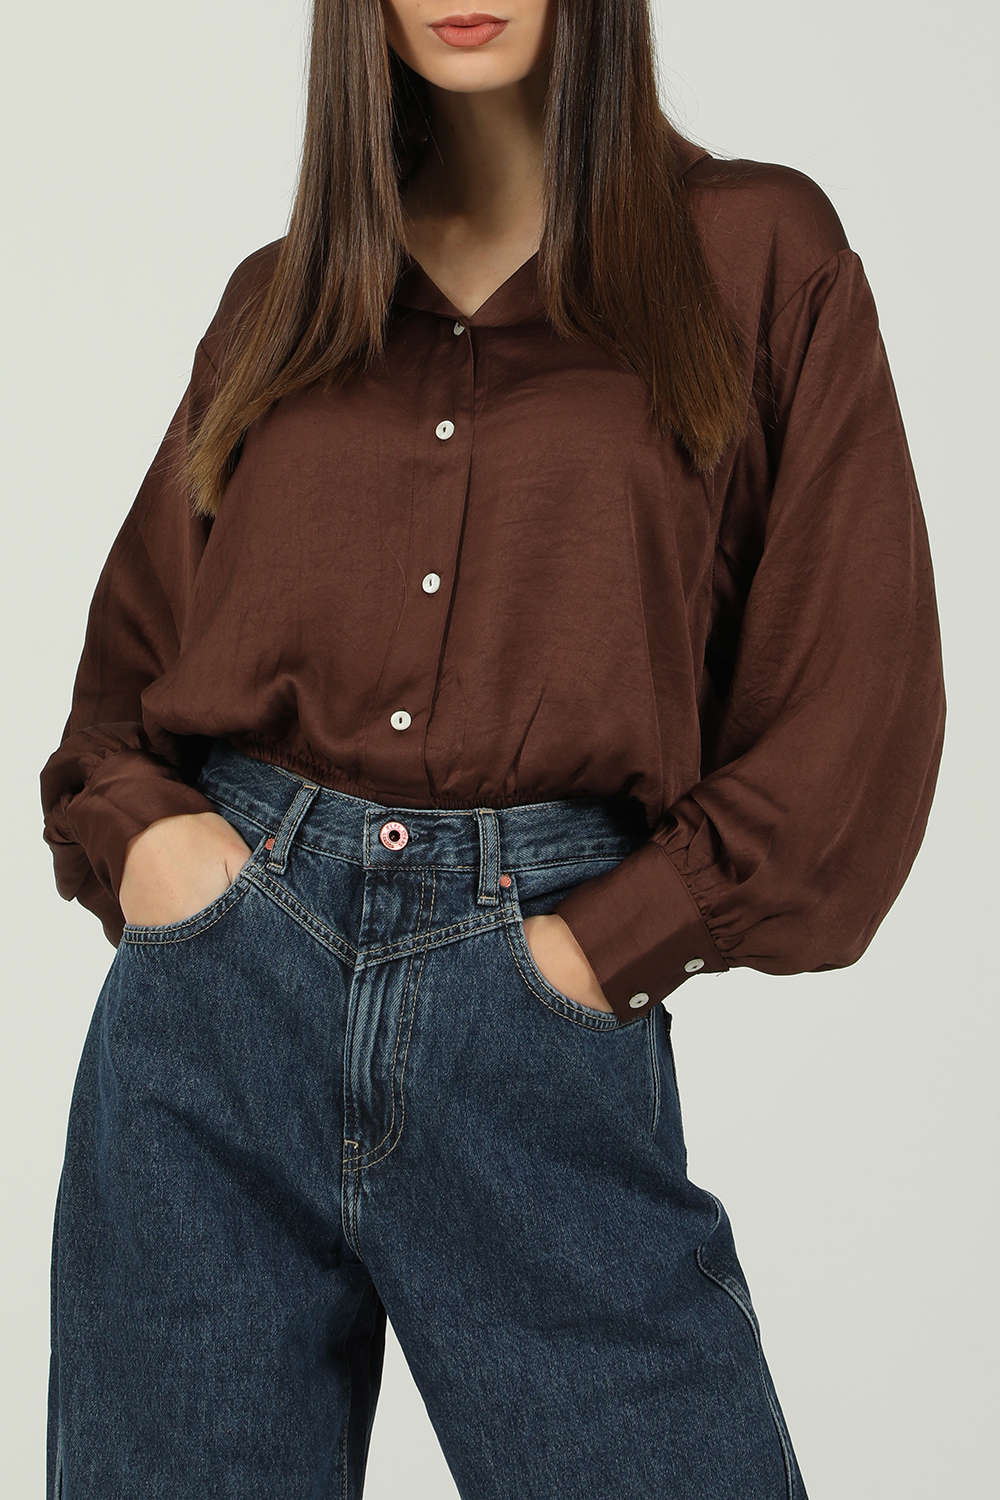 AMERICAN VINTAGE – Γυναικείο πουκάμισο AMERICAN VINTAGE WID06C σοκολατί 1821905.0-00K4